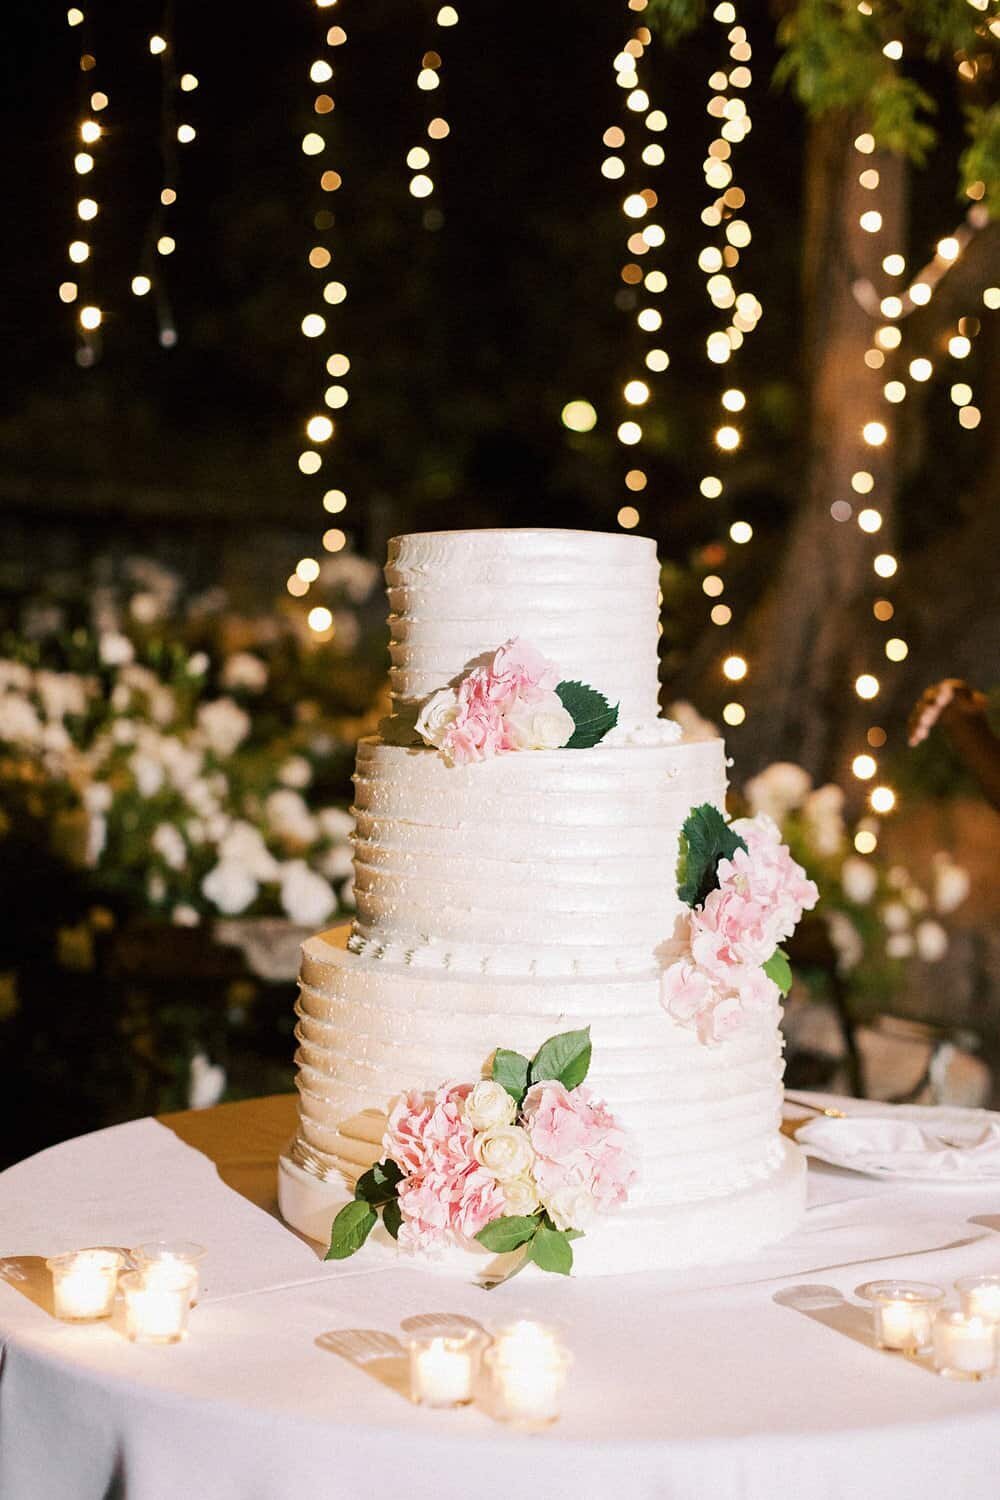 Positano-wedding-villa-San-Giacomo-cake-cutting-by-Julia-Kaptelova-Photography-346